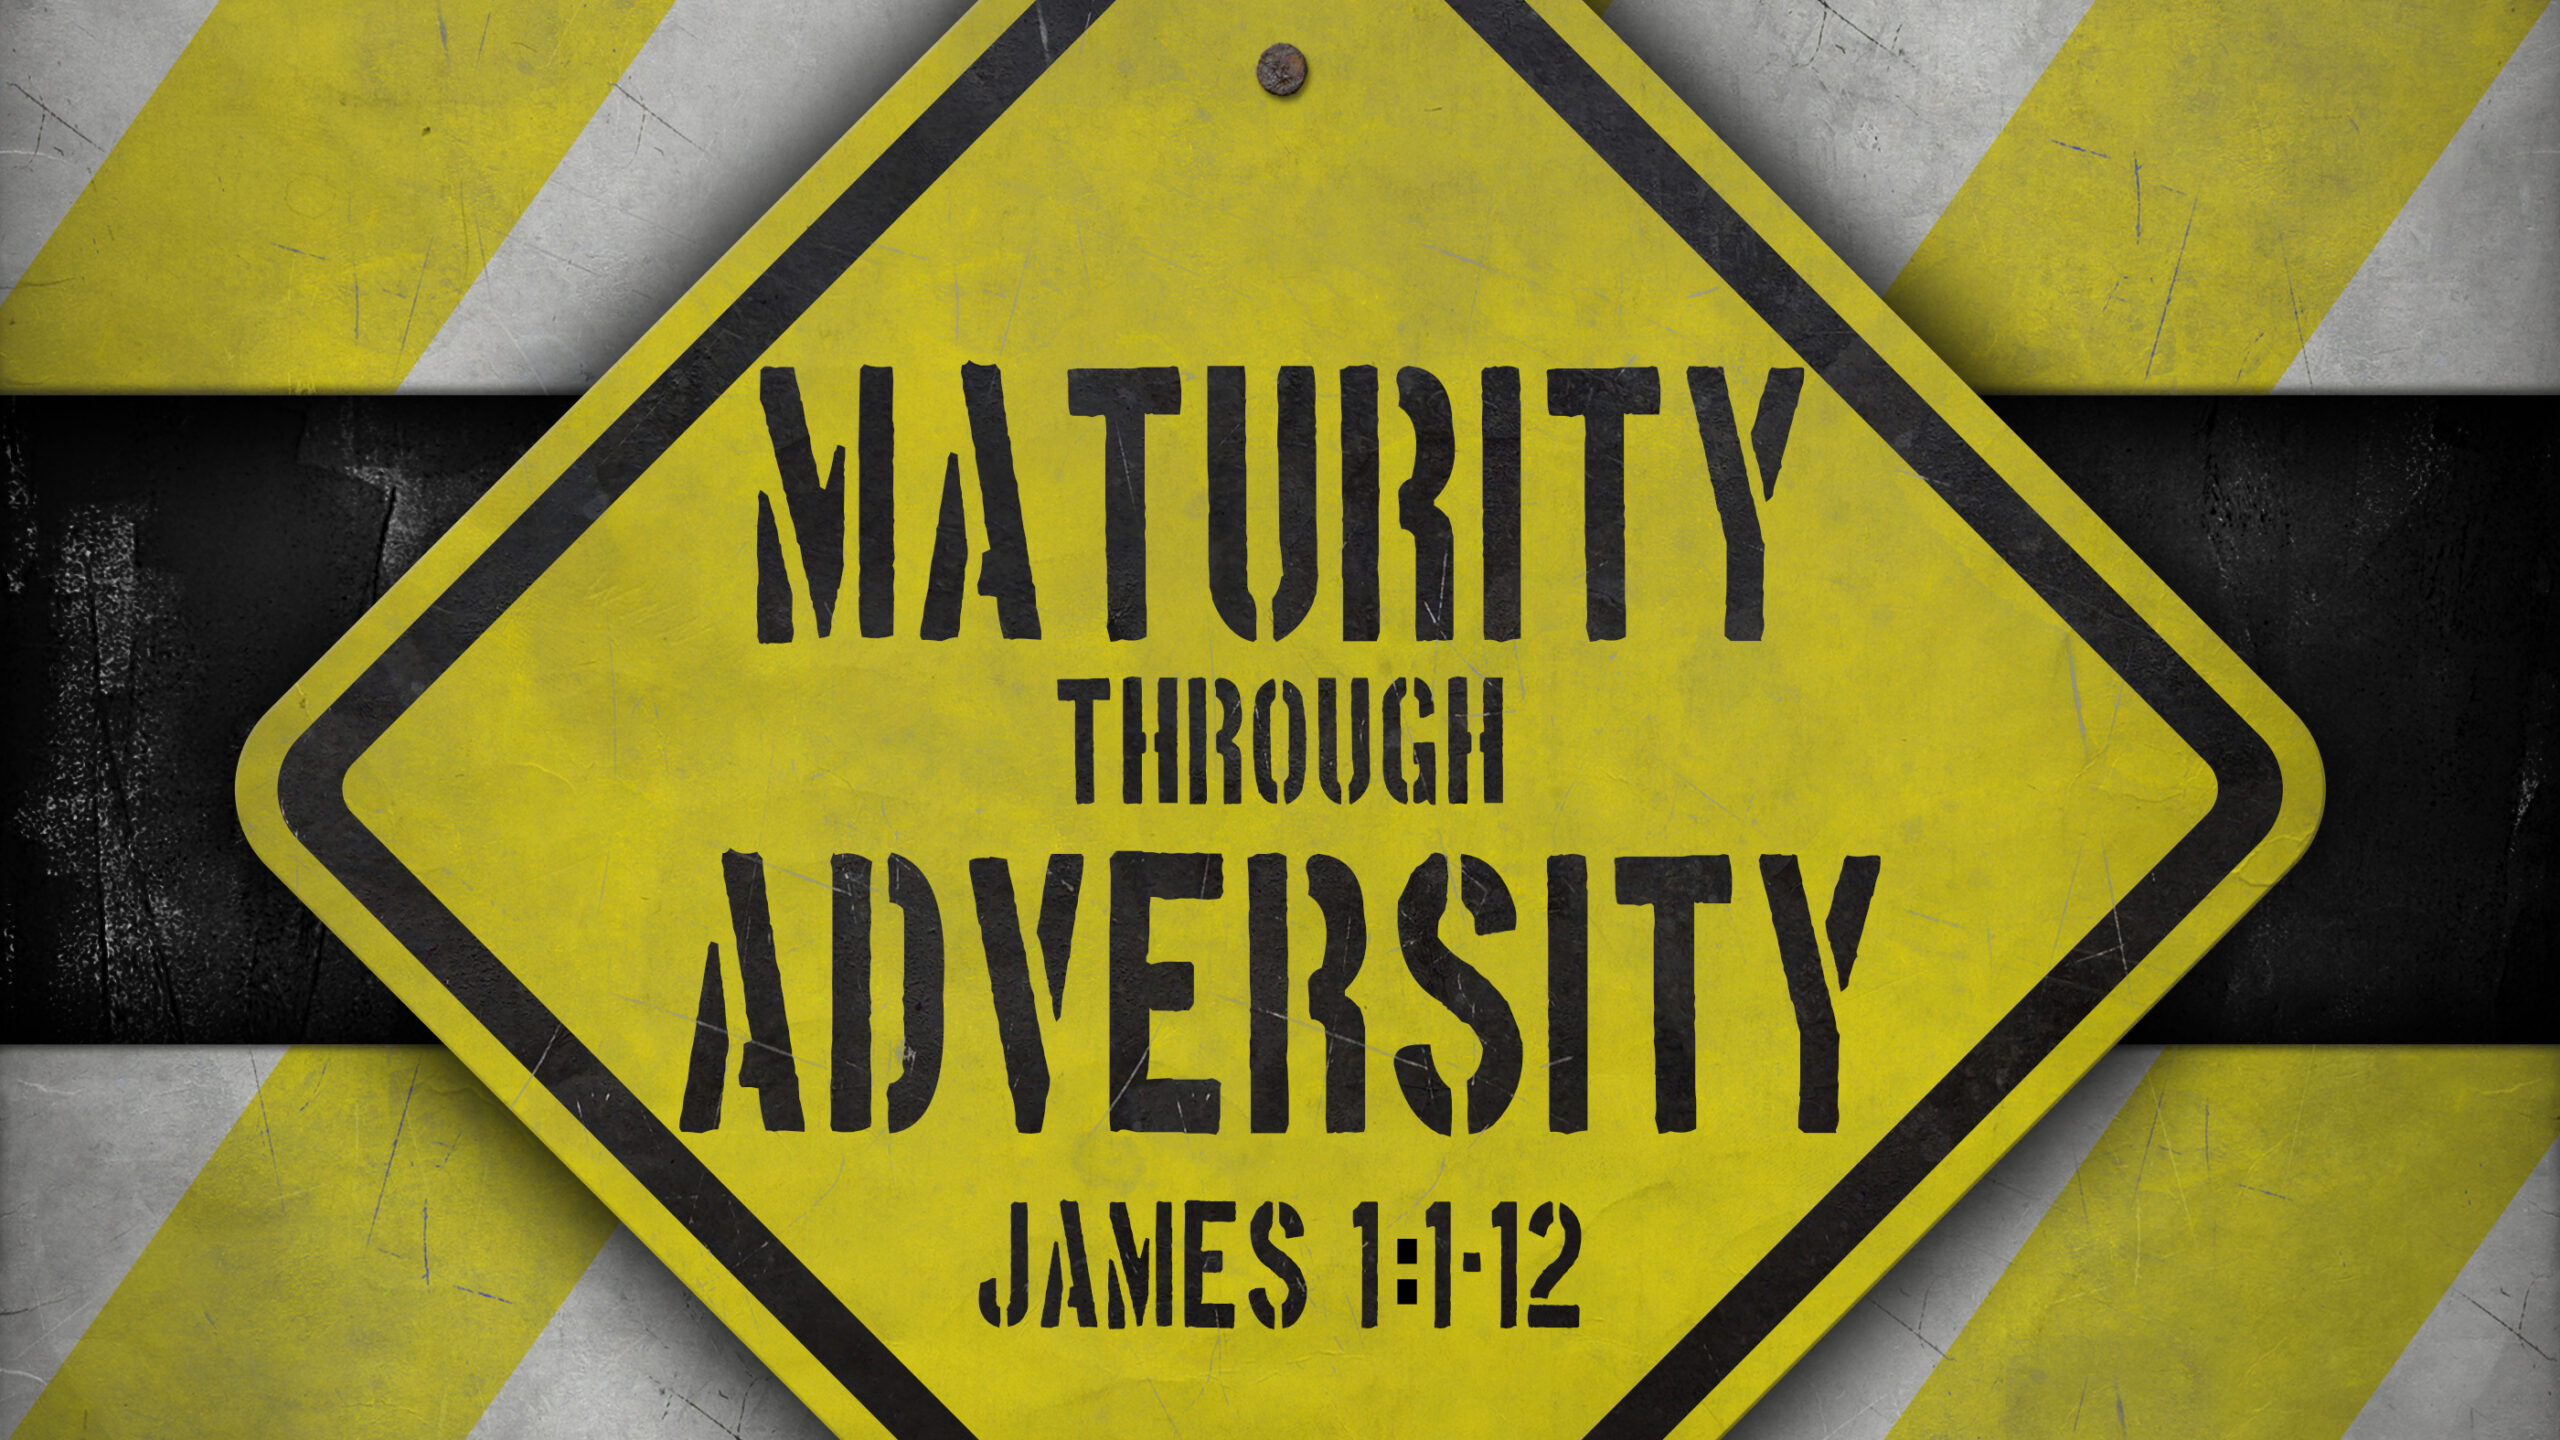 "Maturity through Adversity"